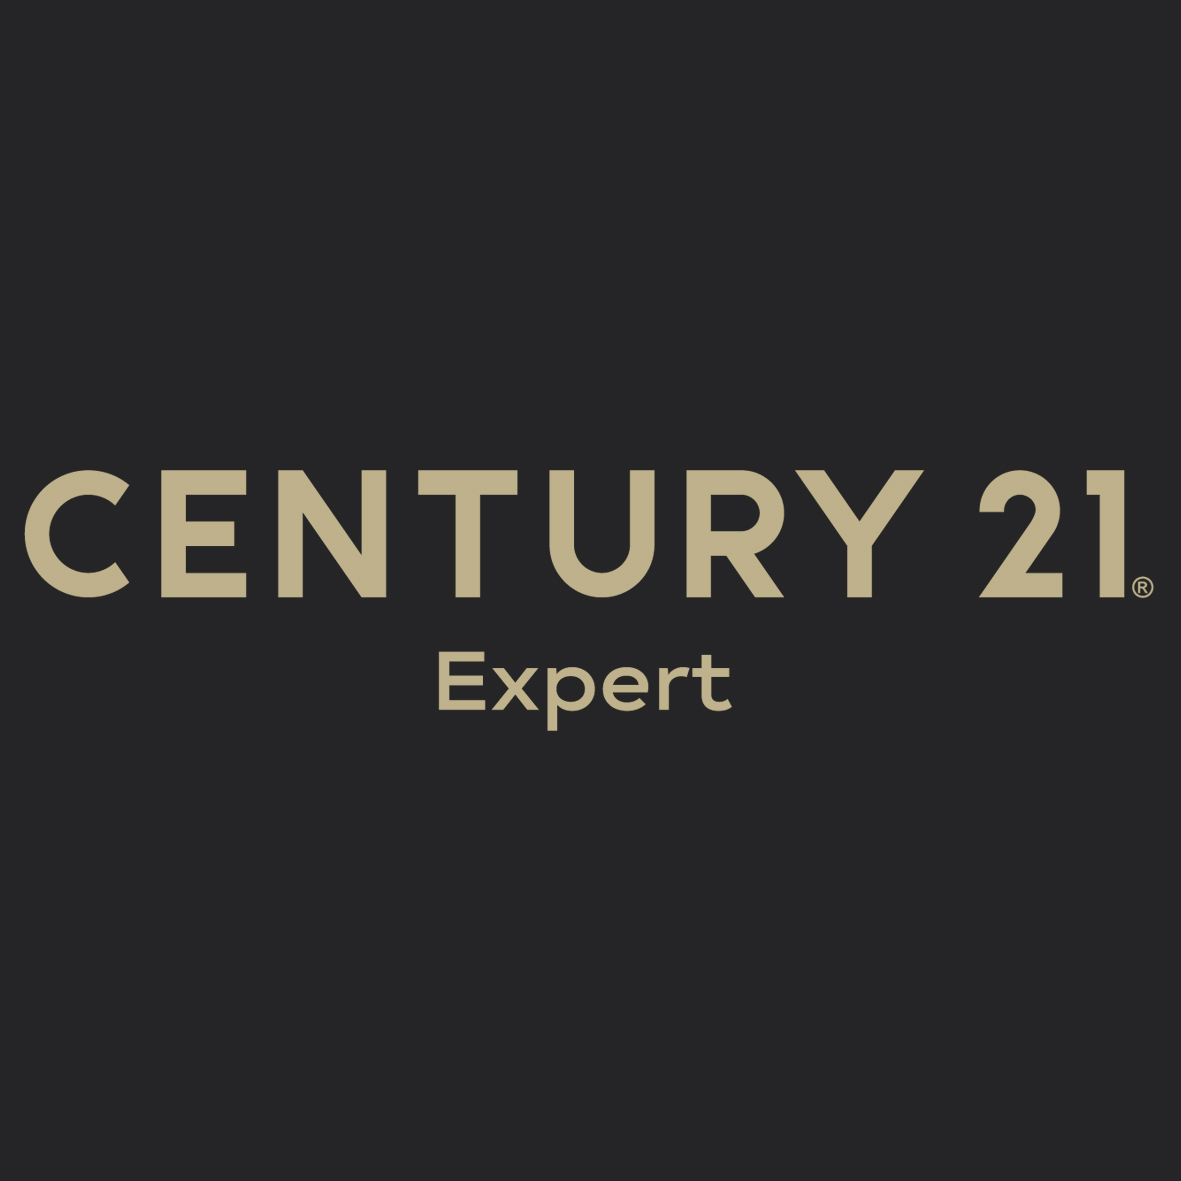 CENTURY 21 Expert